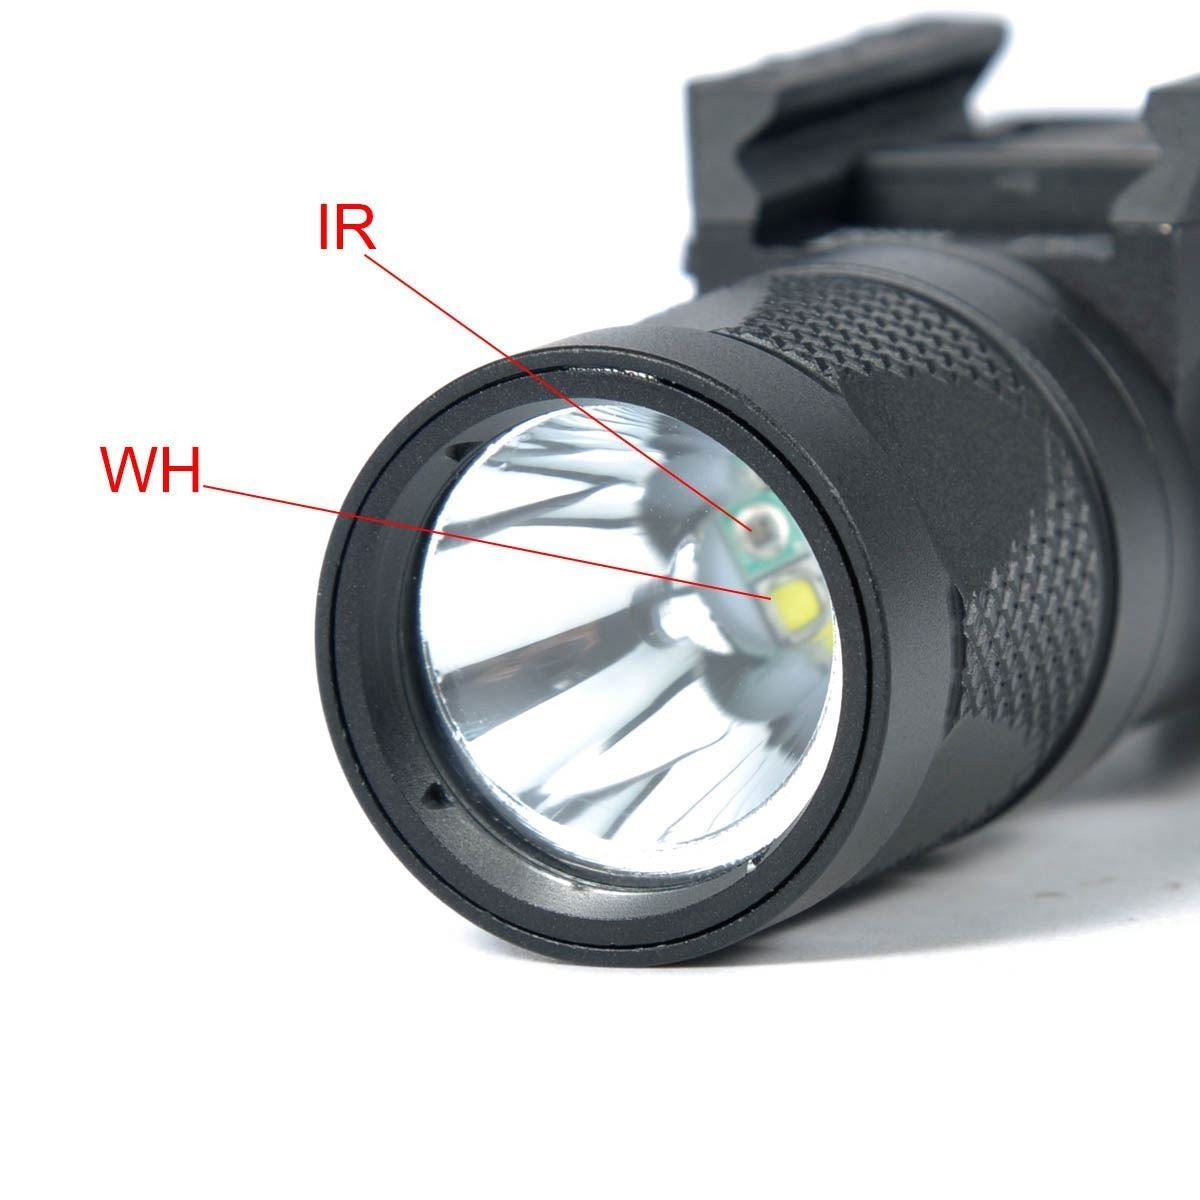 SF X300V LED Tactical Flashlight